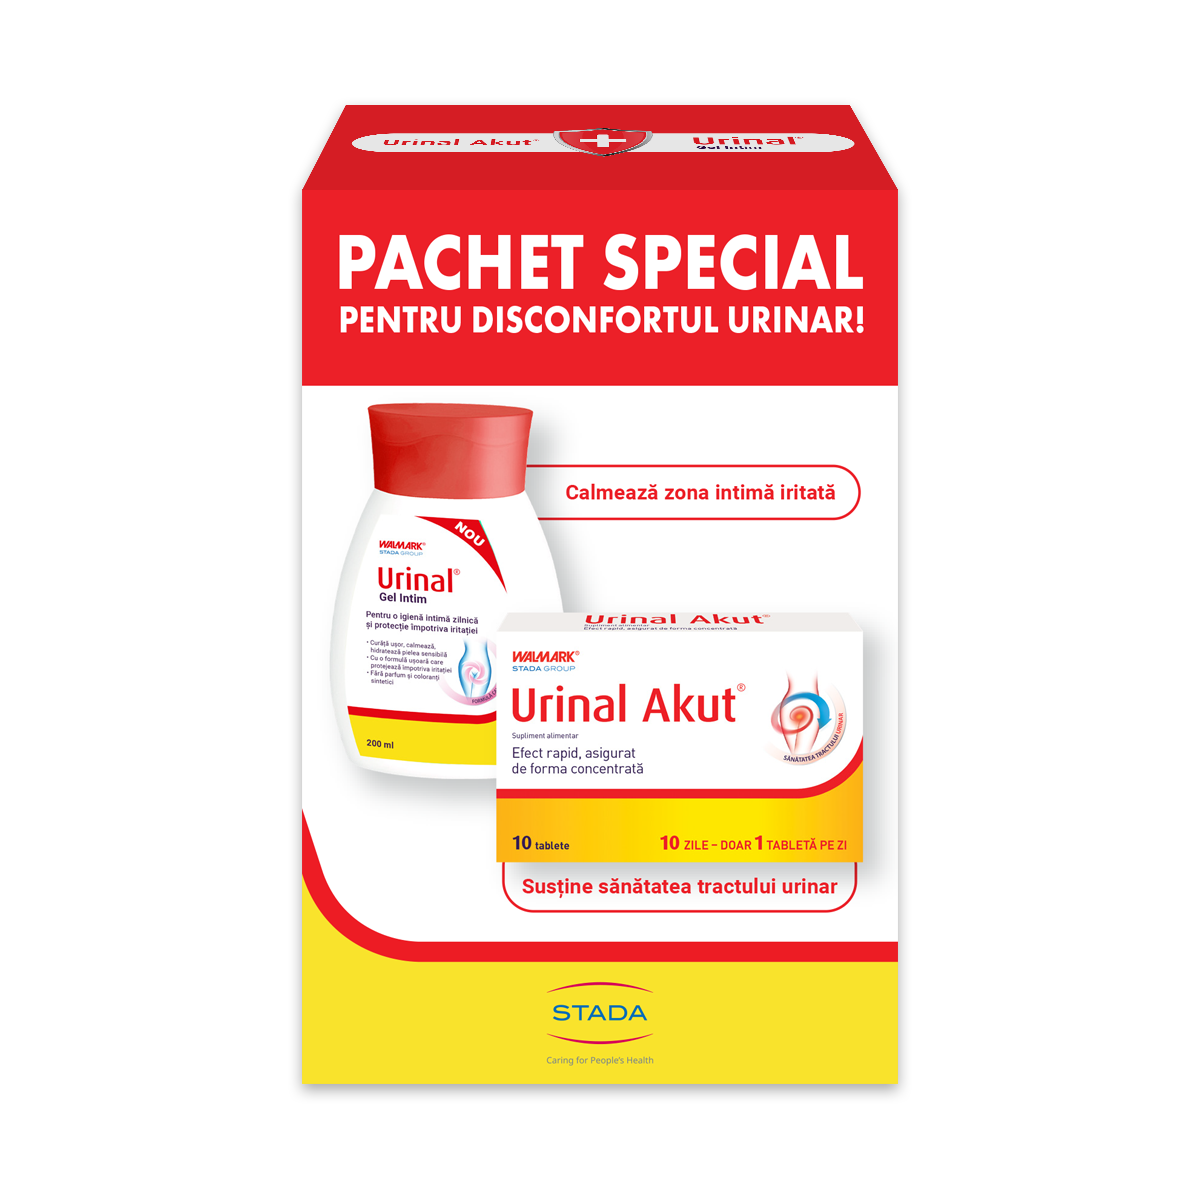 Antiseptice - Pachet Urinal gel intim, 200 ml + Urinal akut, 10 capsule, Walmark, sinapis.ro